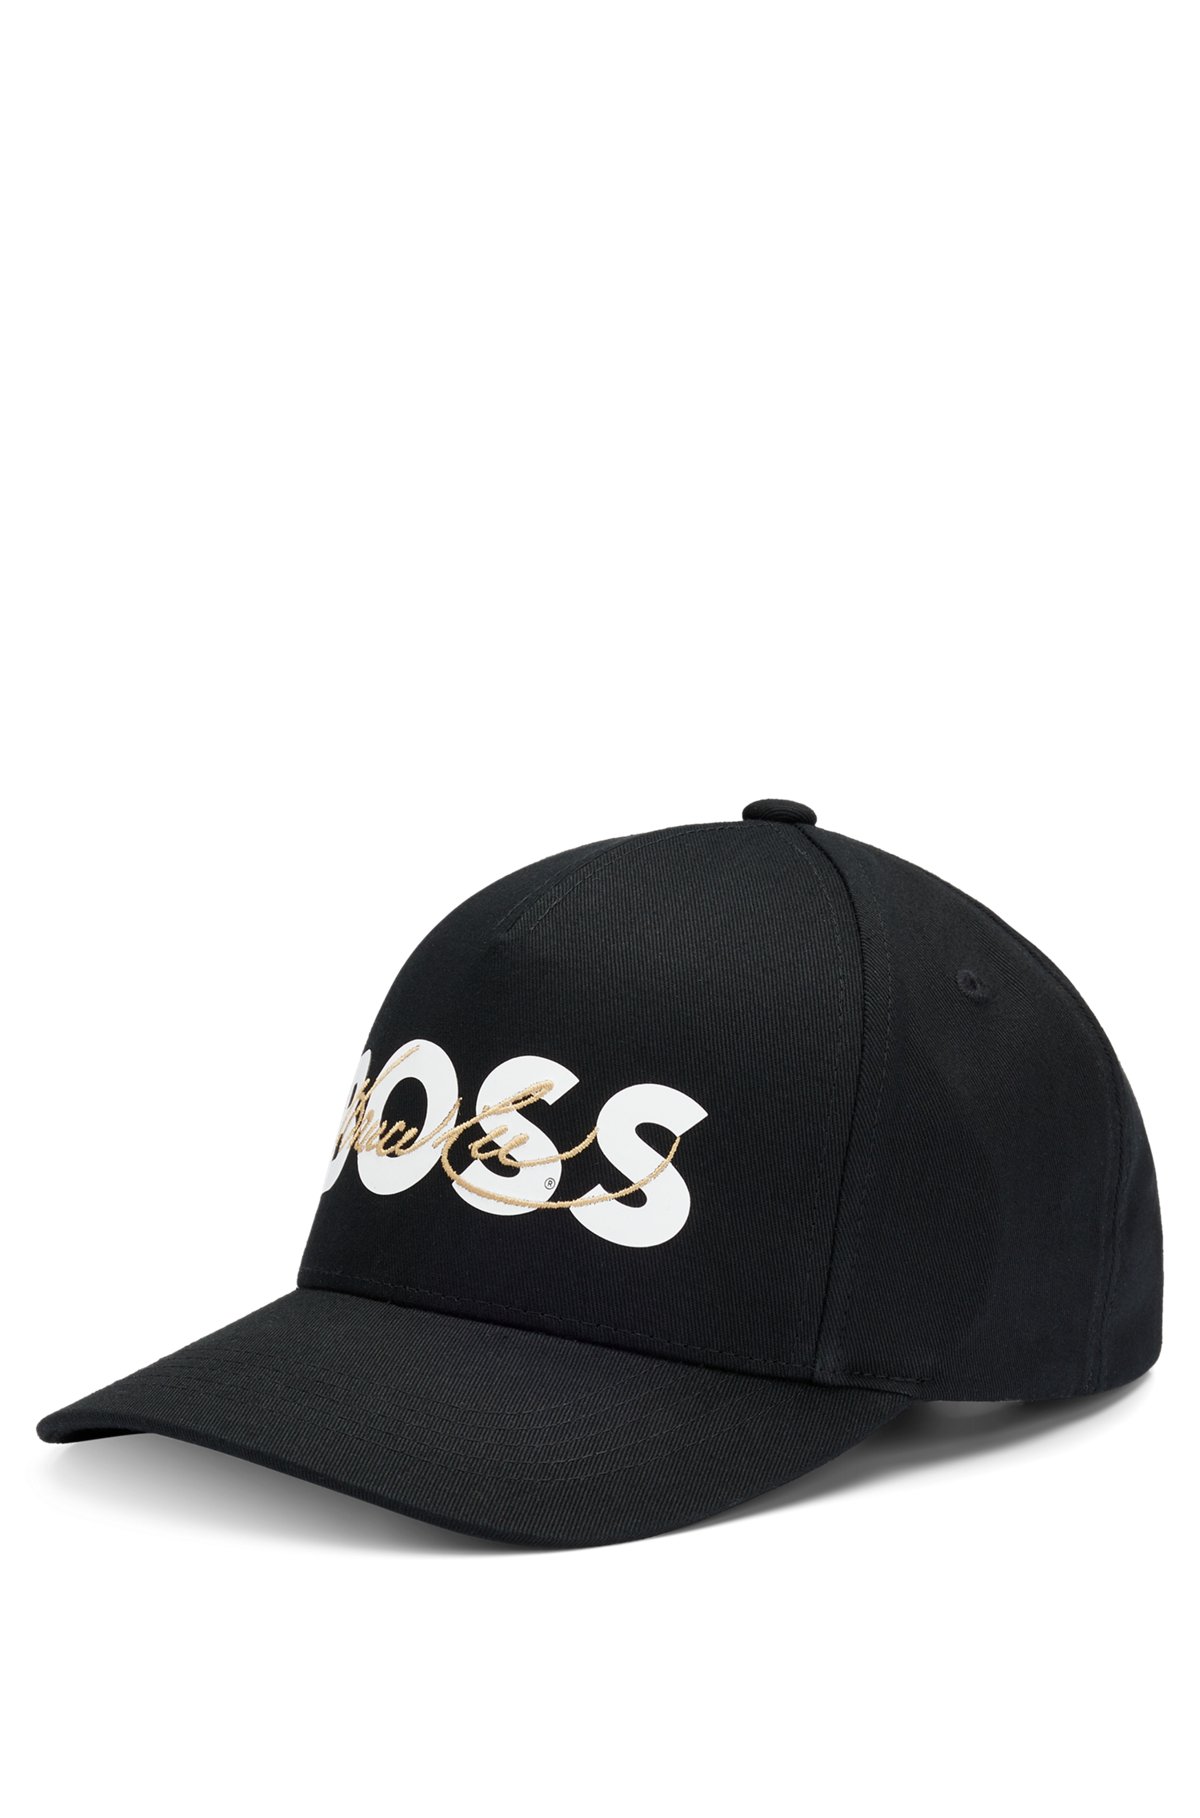 BOSS - BOSS x Bruce Lee gender-neutral cap with special artwork